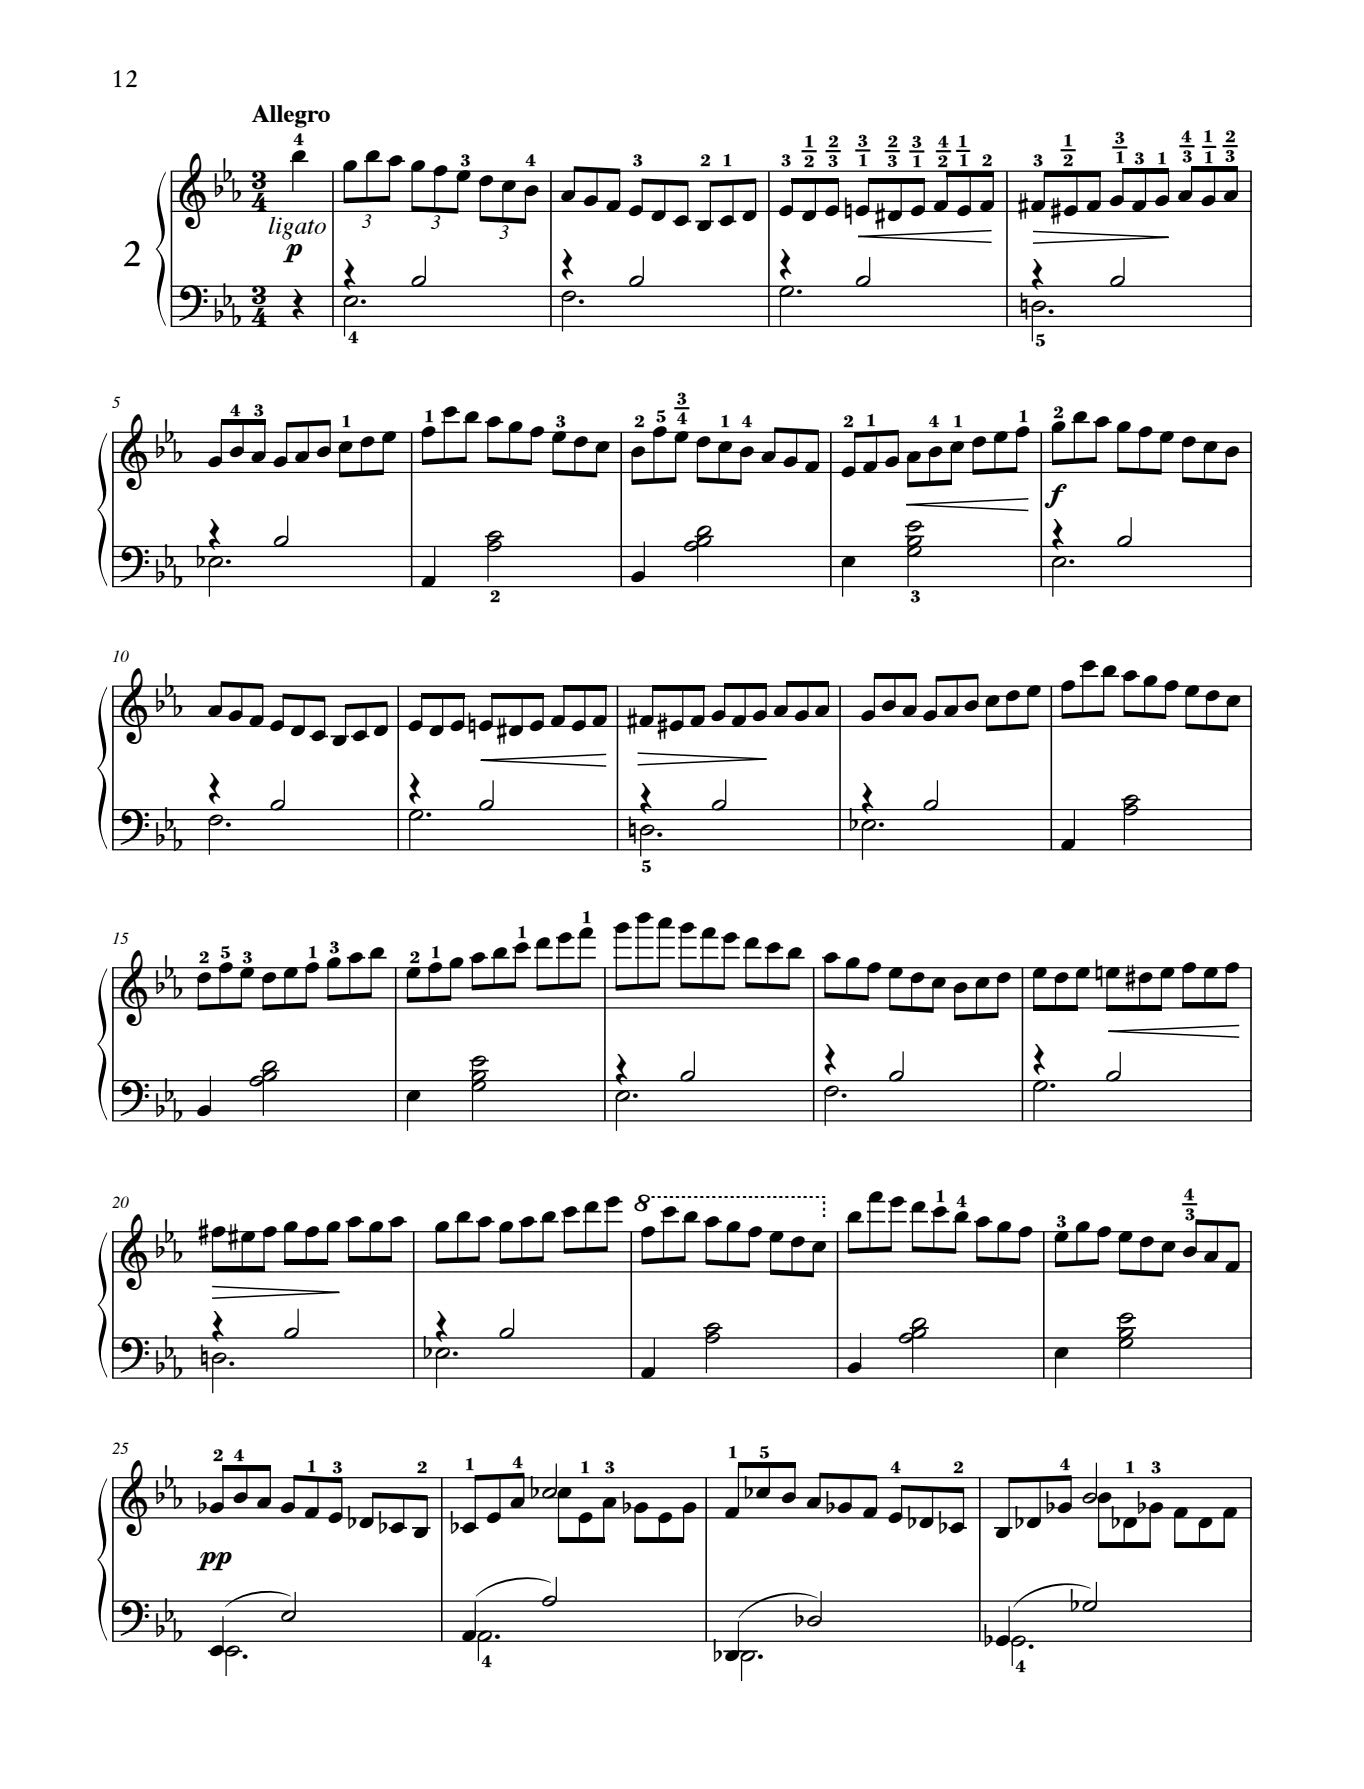 Impromptu (Schubert) Op. 90 No. 2